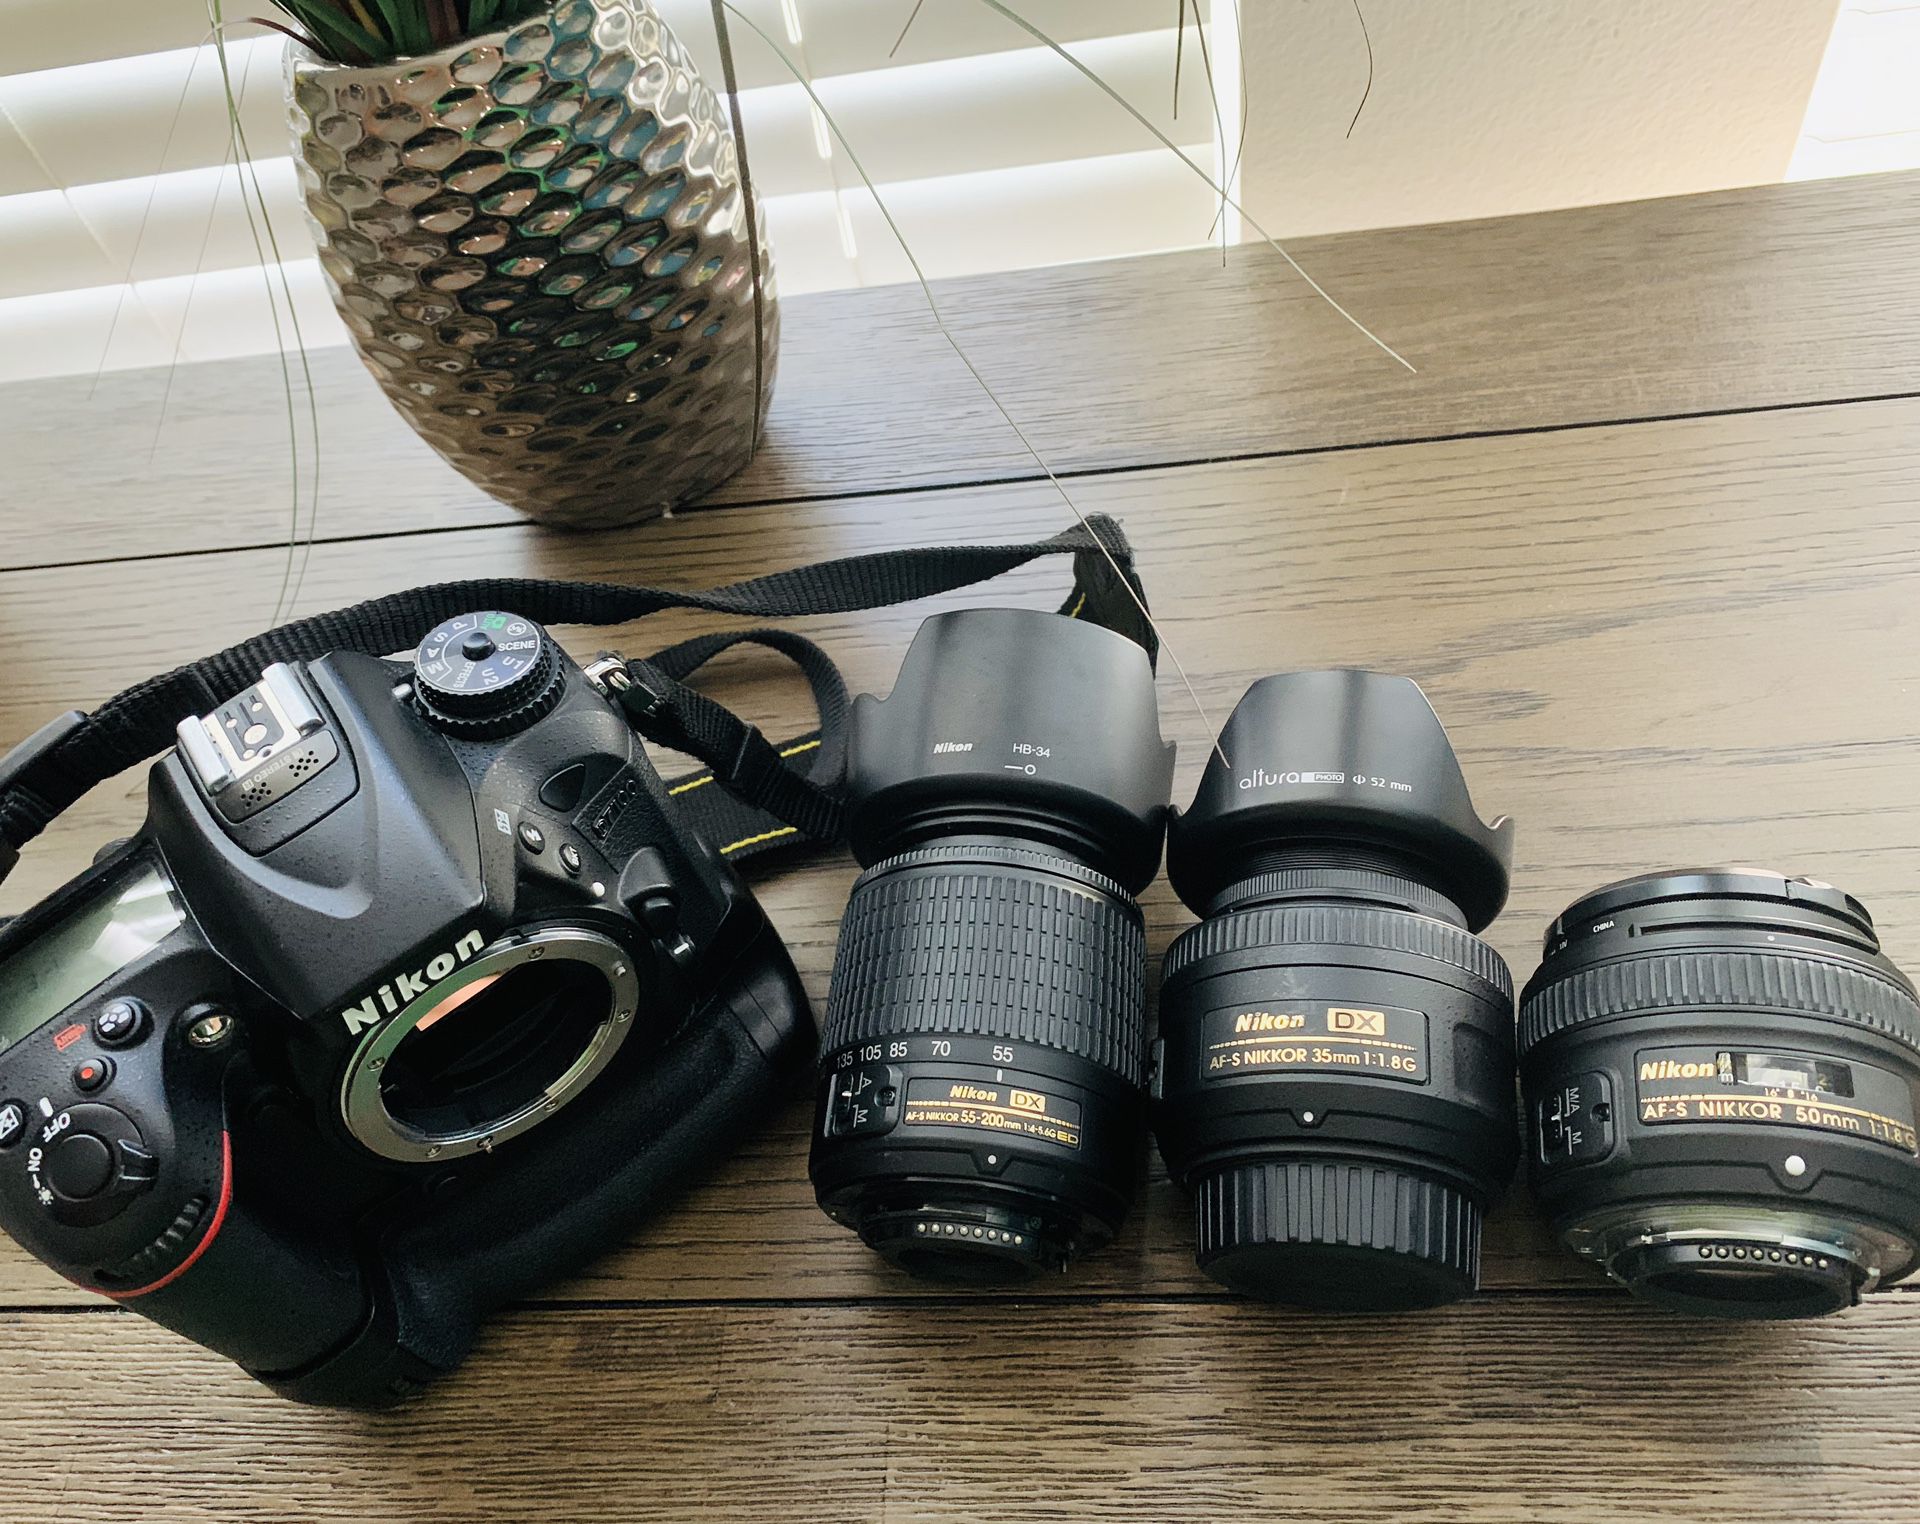 Nikon D7100+ with lenses